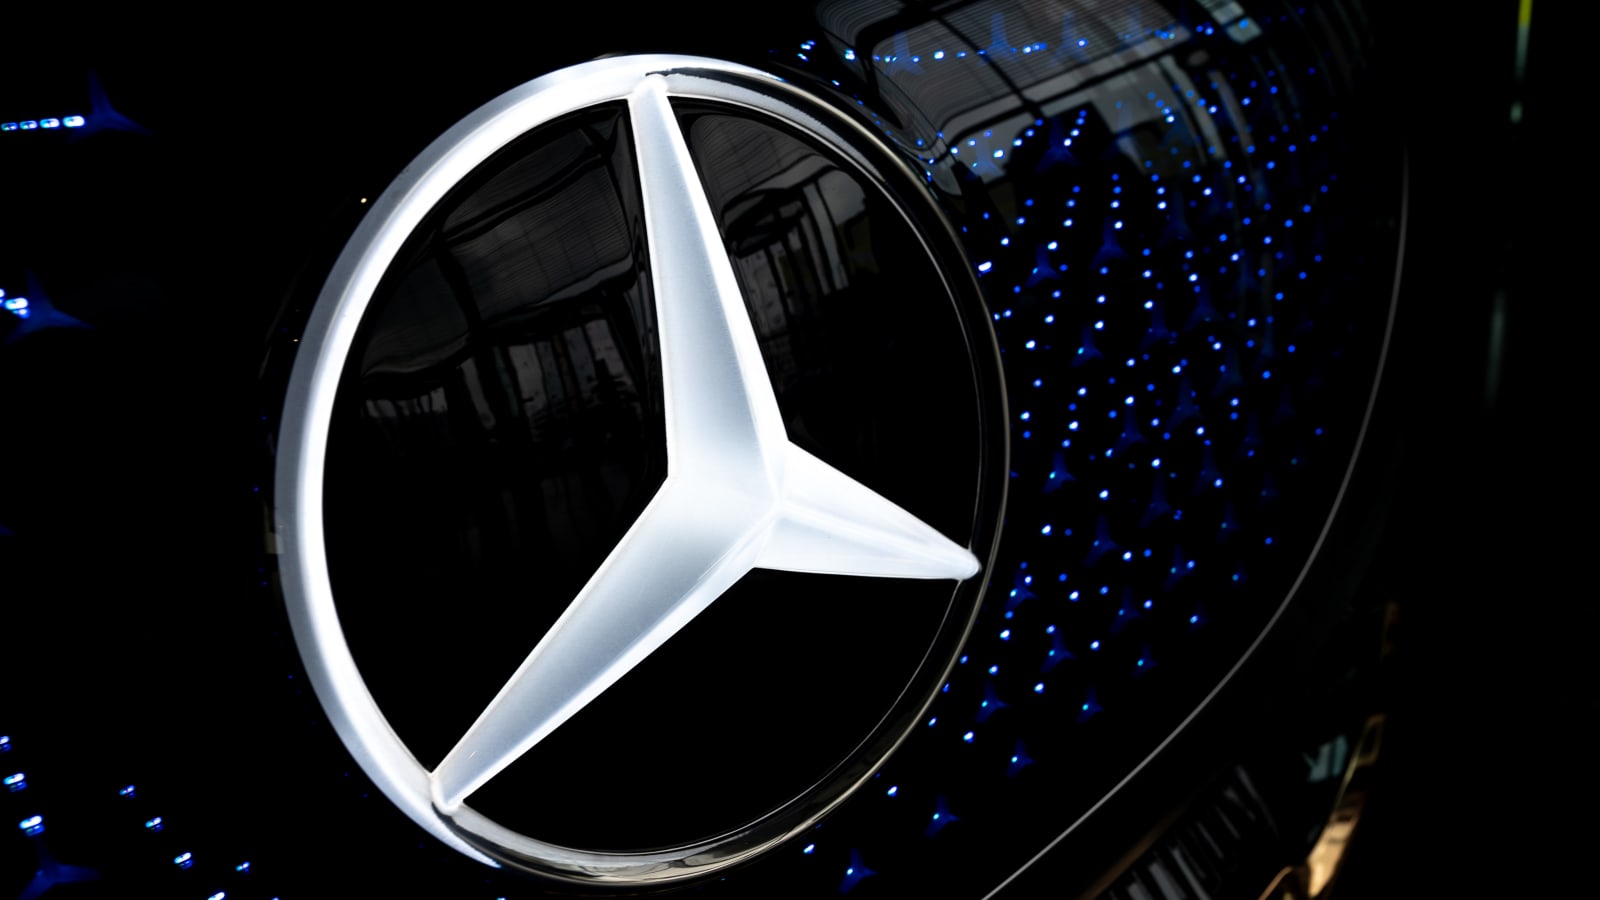 Daimler S Mercedes Benz Triples Electric Car Sales